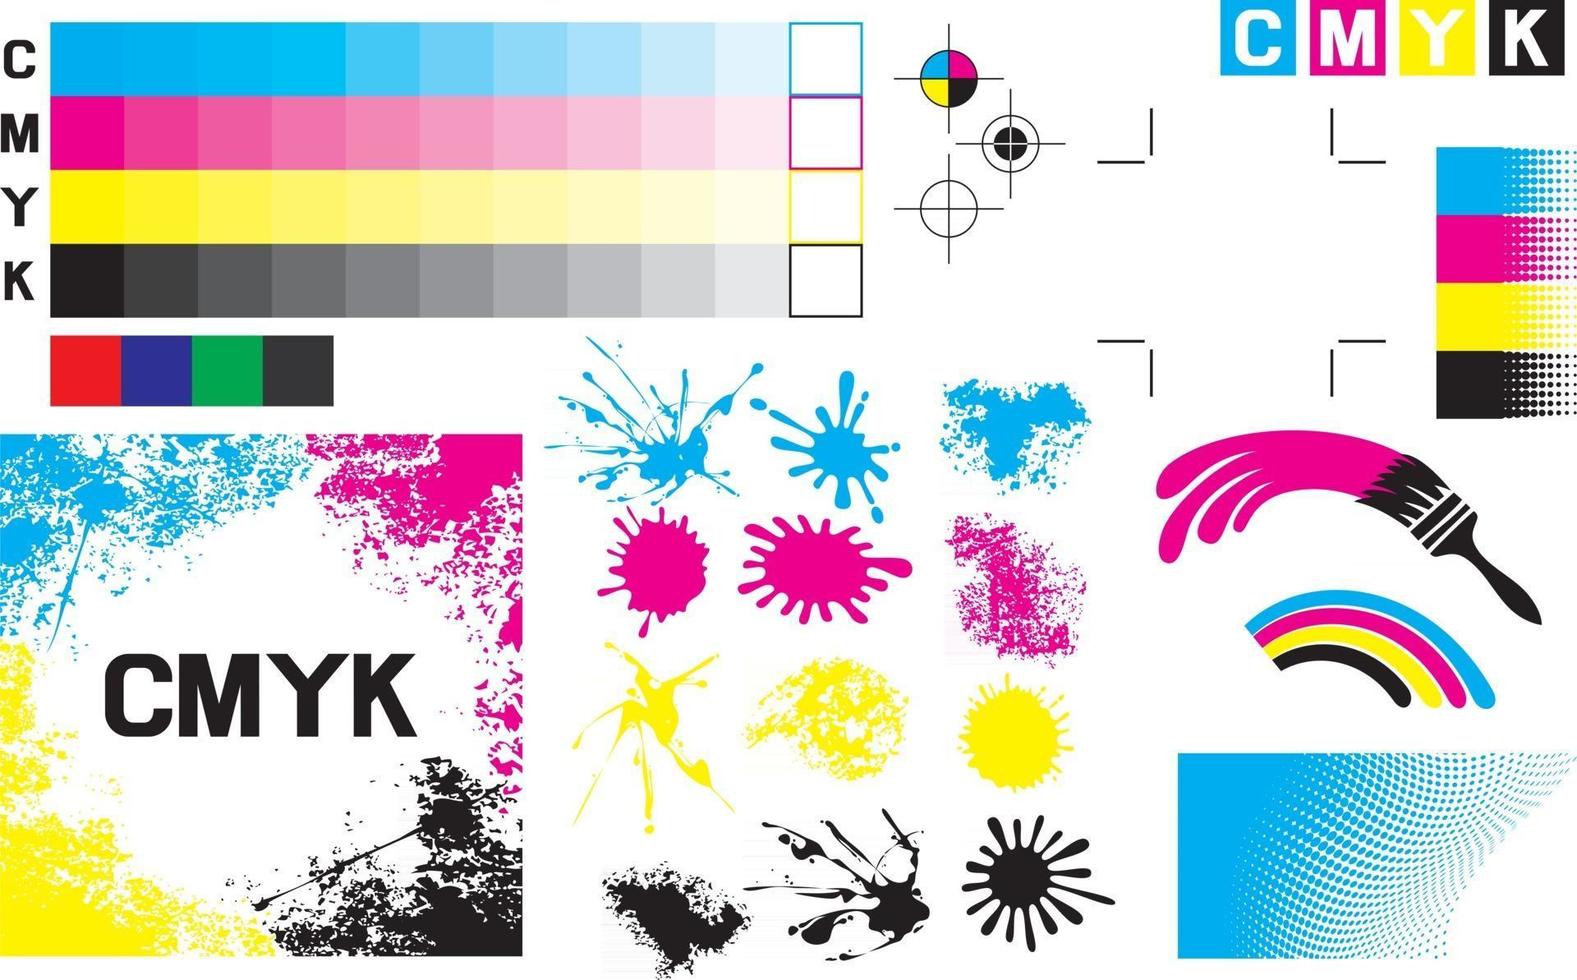 Cmyk Press Marks Design vector